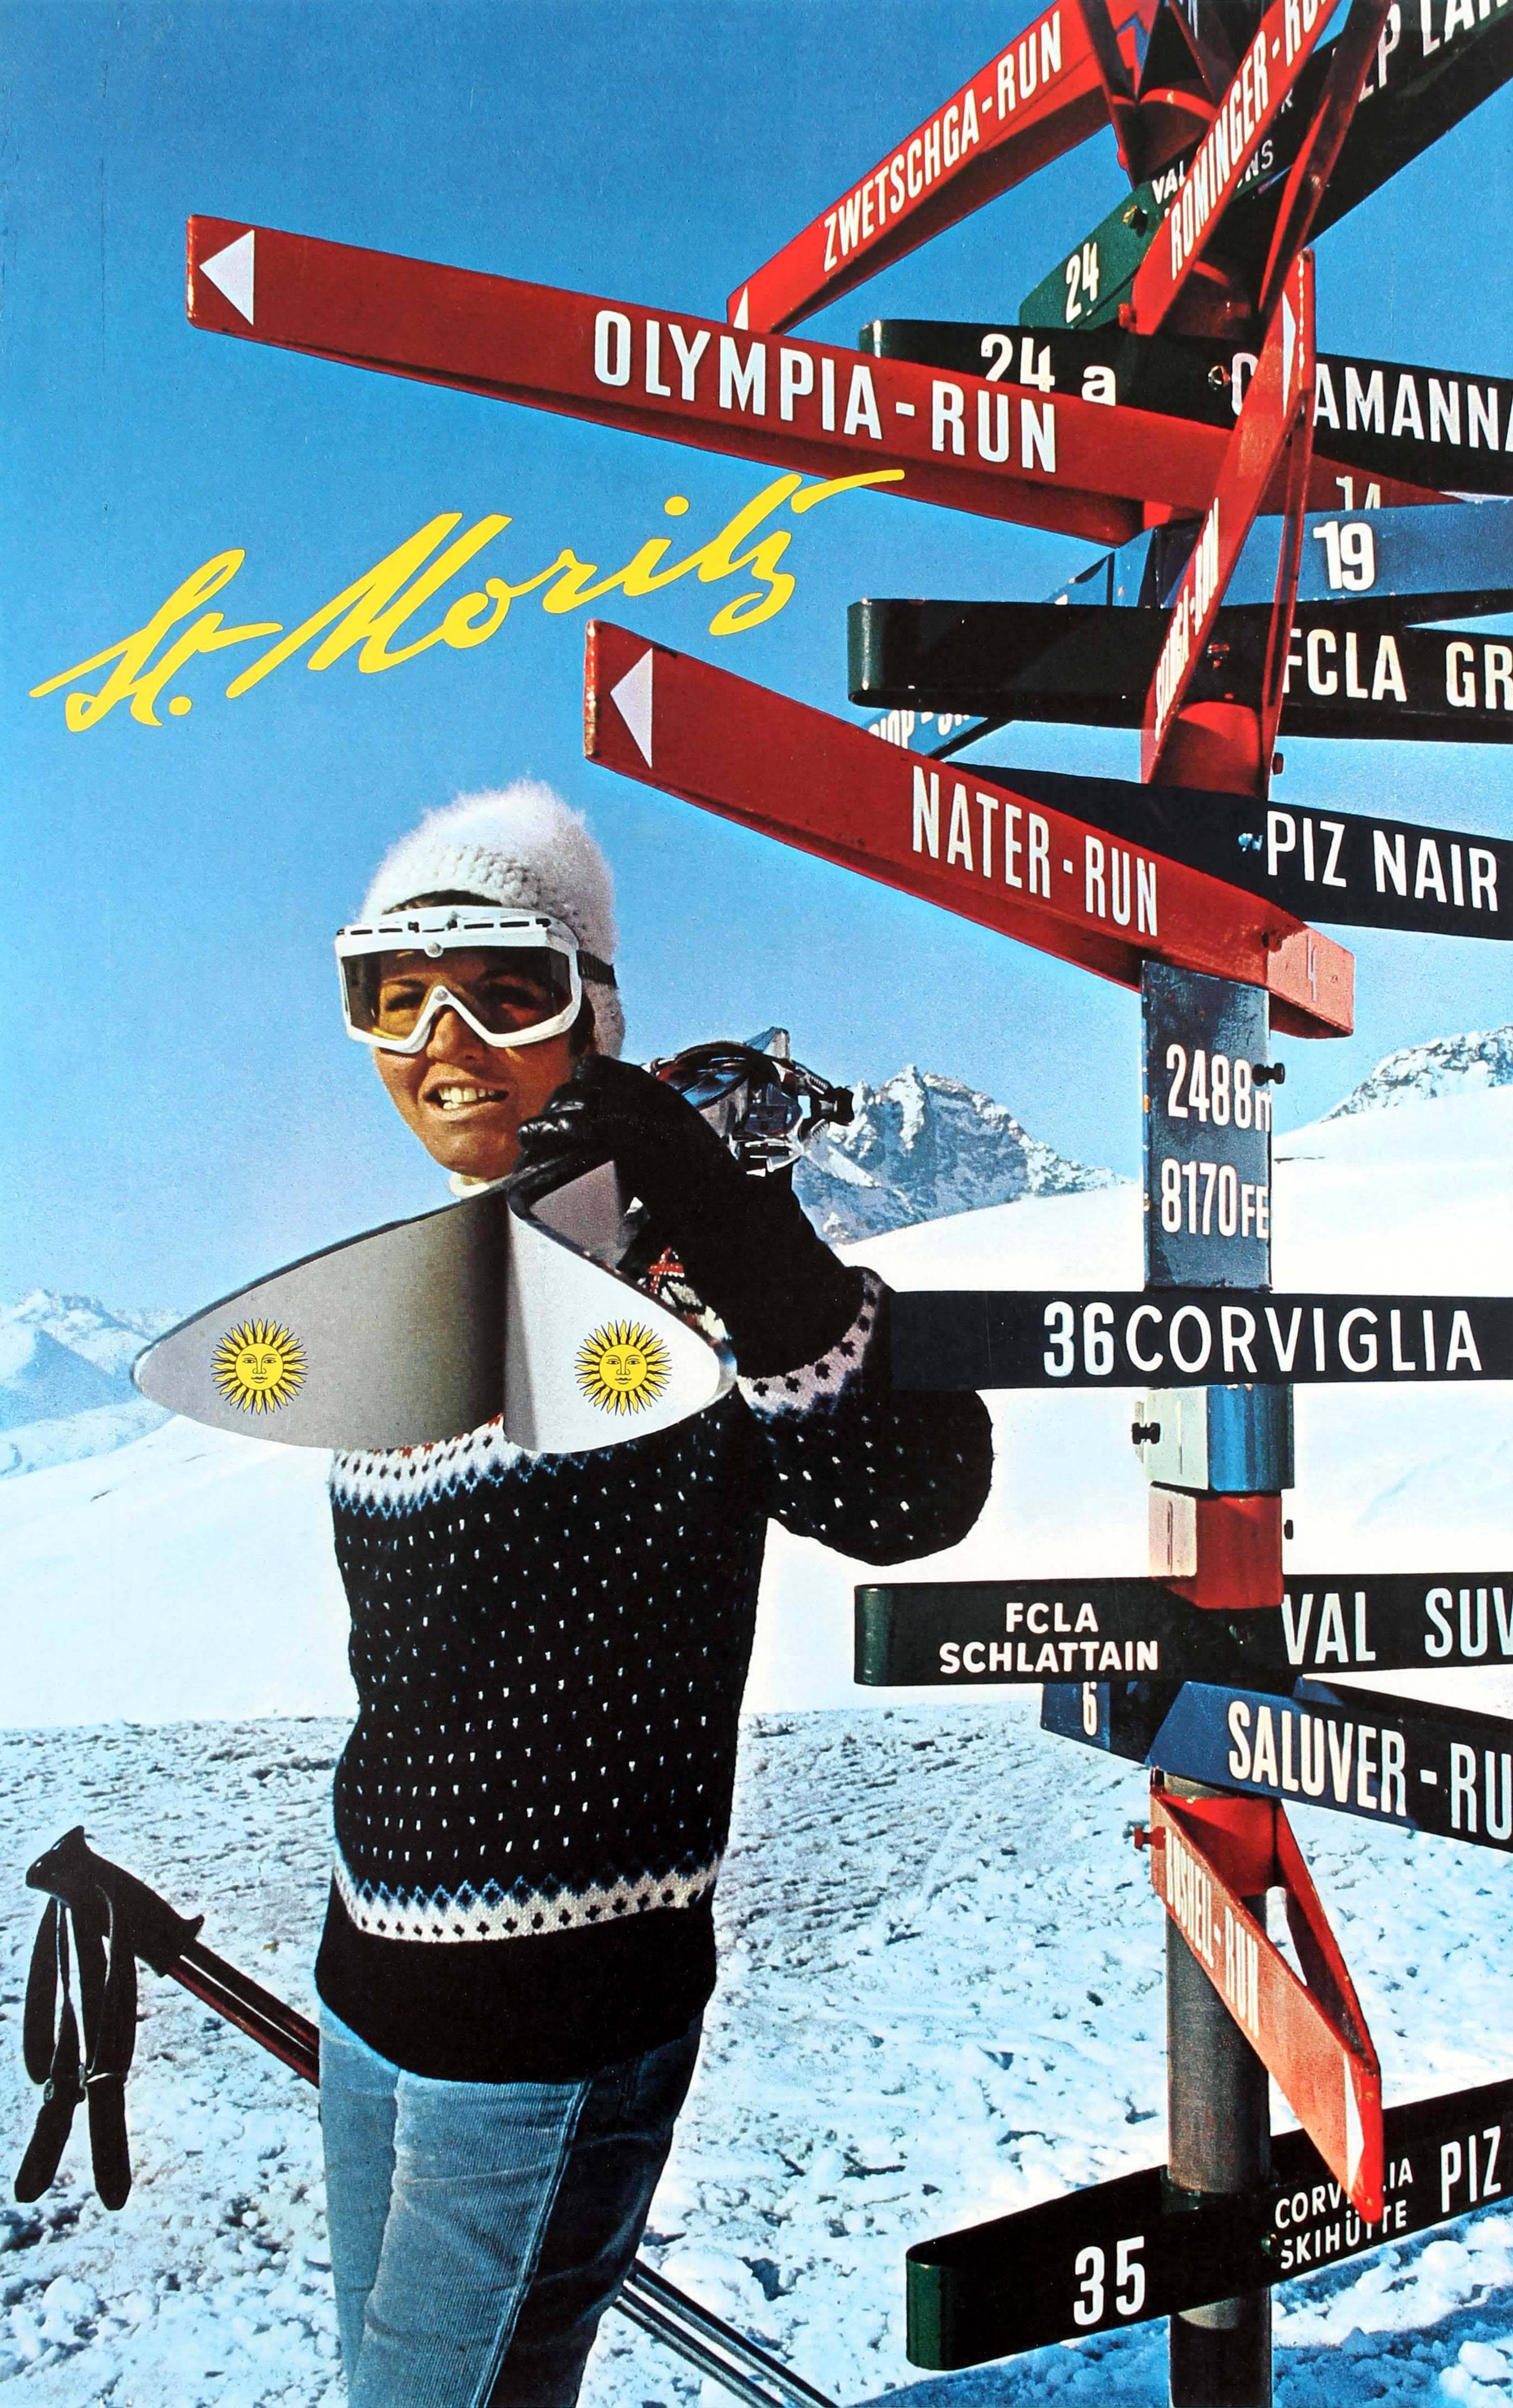 Unknown Print - Original Vintage Swiss Ski Poster For St Moritz - Olympia Run Nater Run Piz Nair